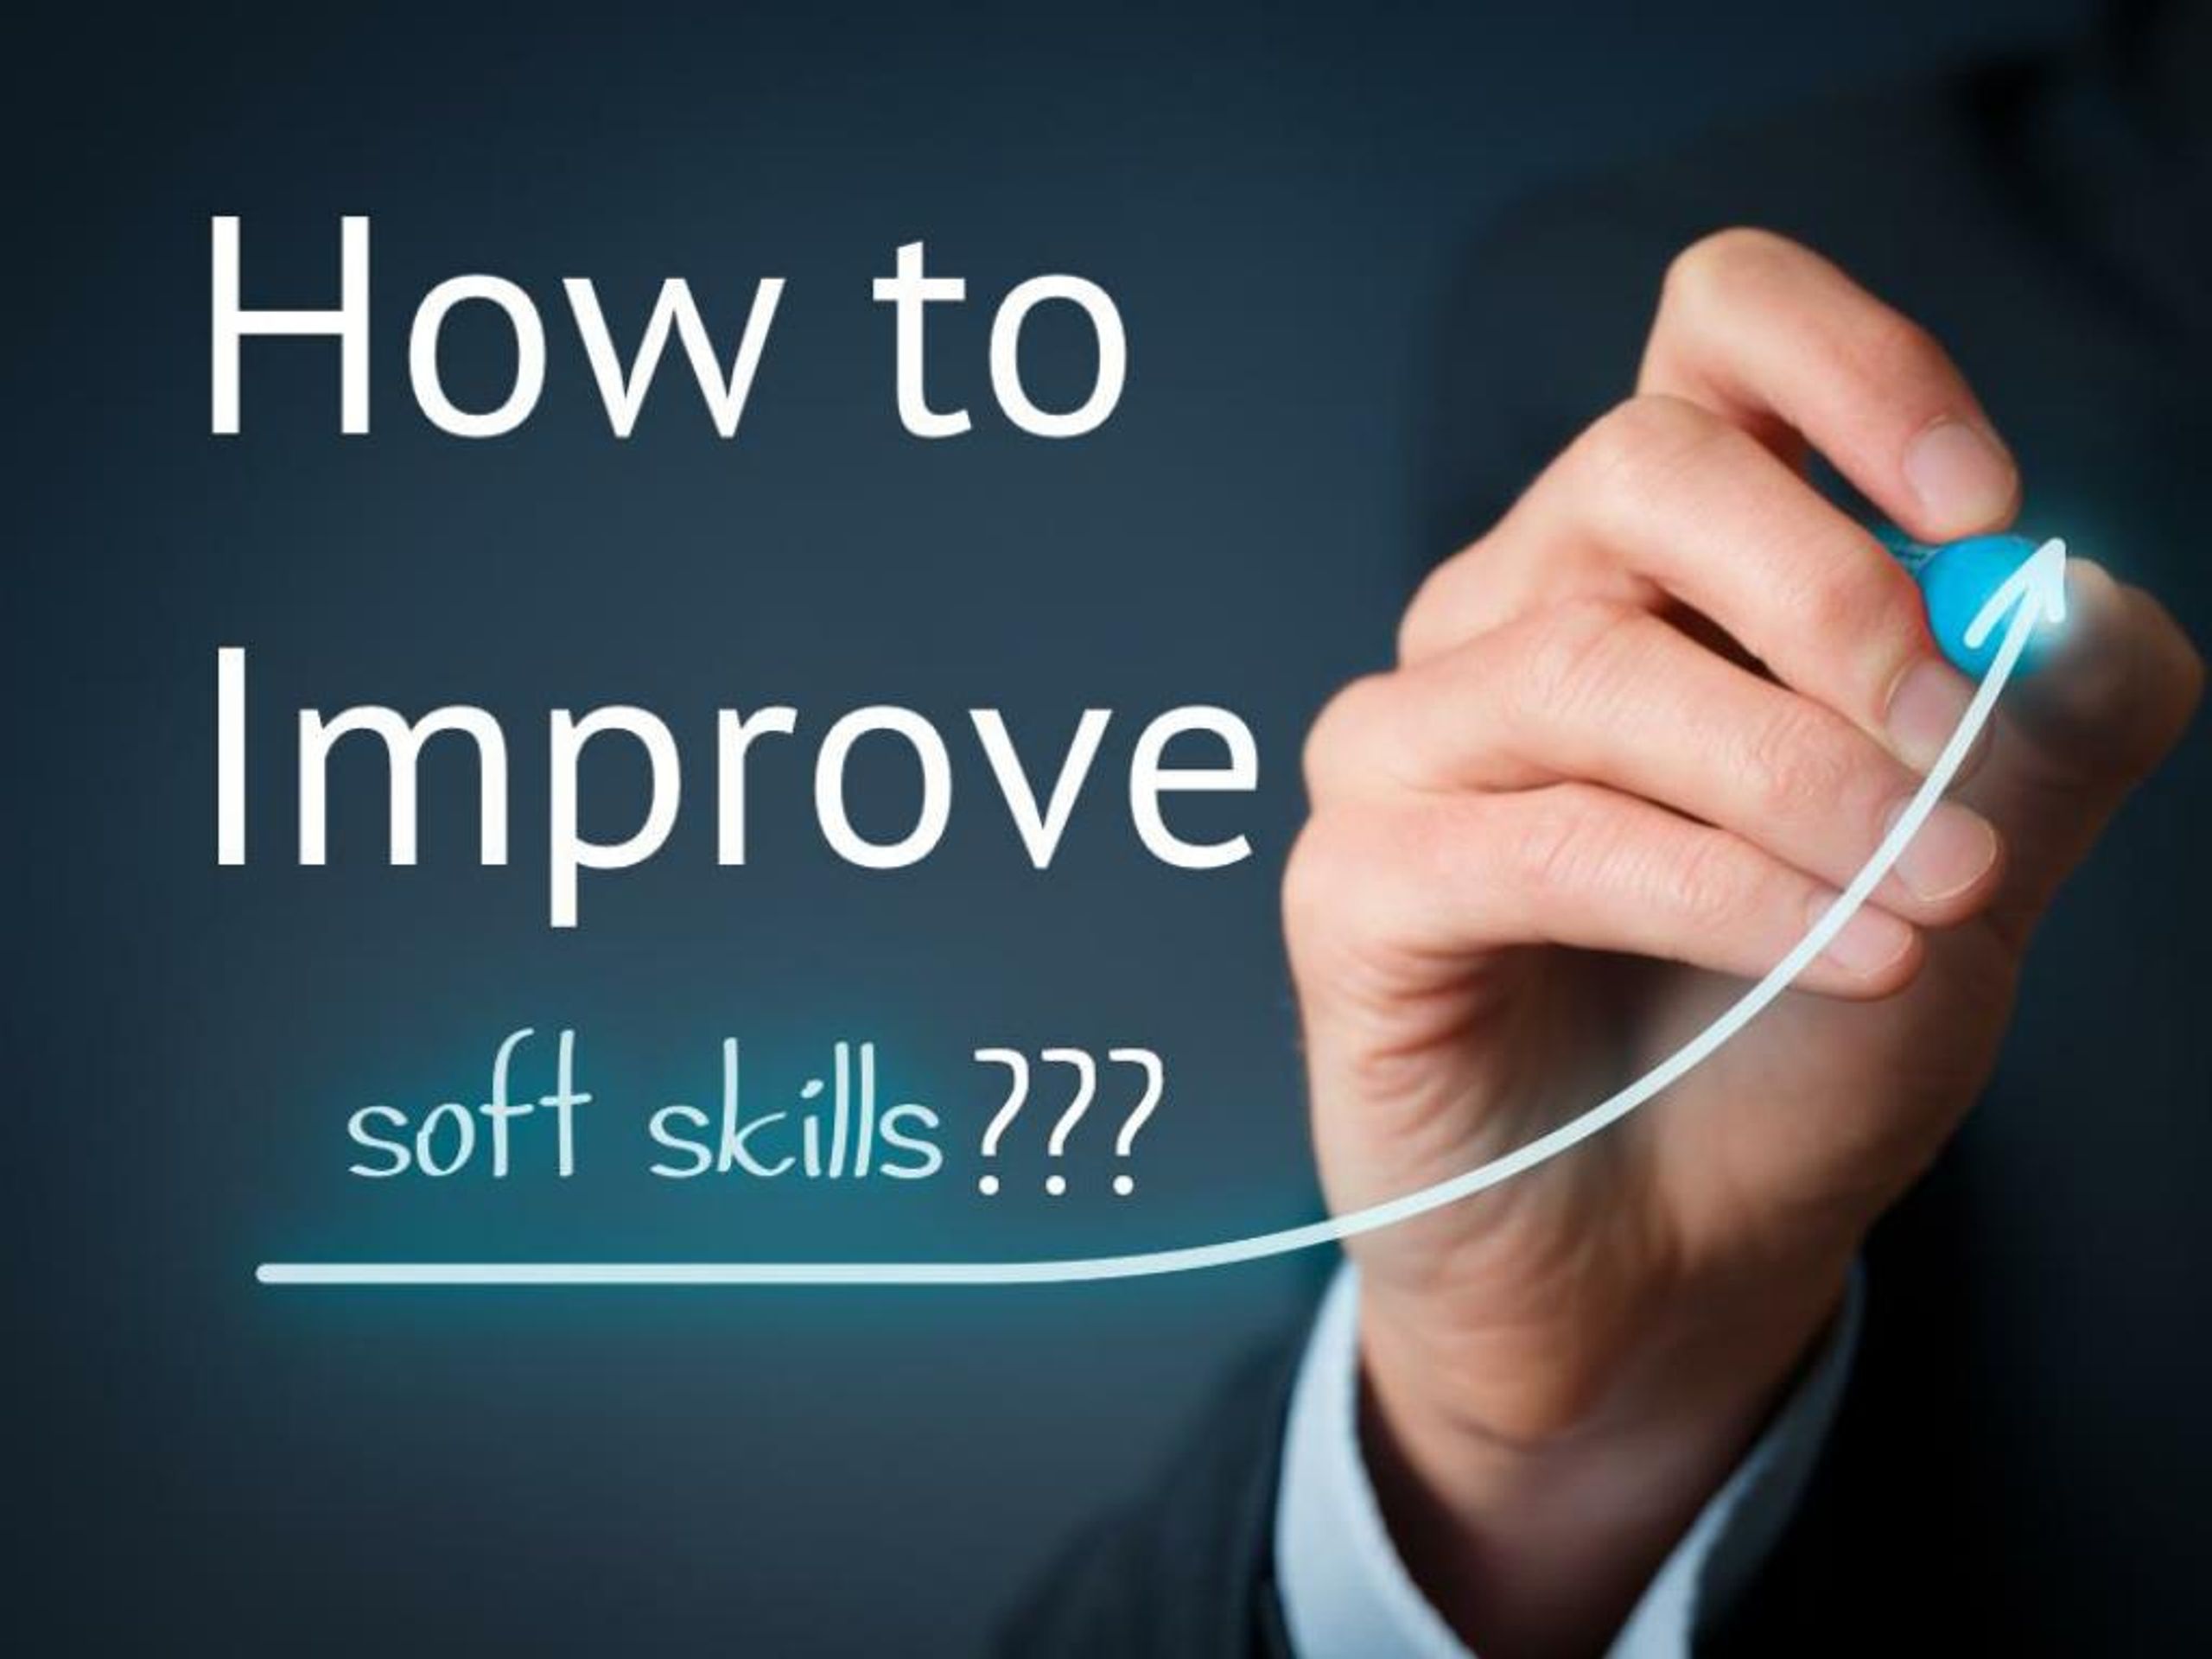 soft skills powerpoint presentation